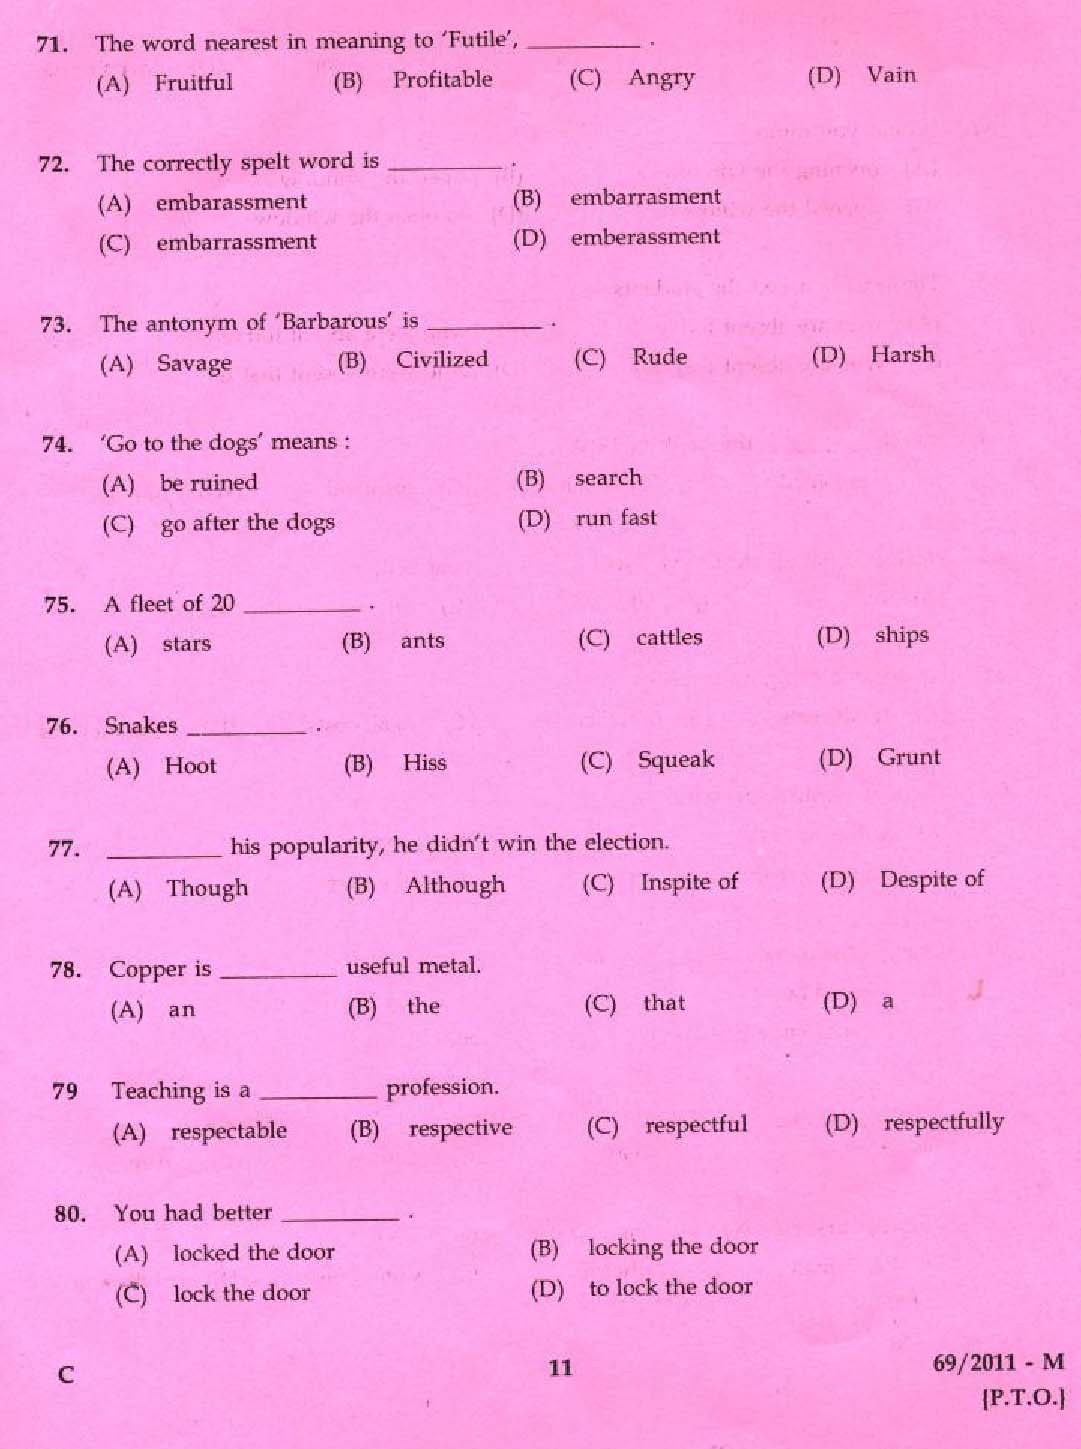 Kerala PSC LD Clerk Alappuzha District Exam Question Paper 2011 9